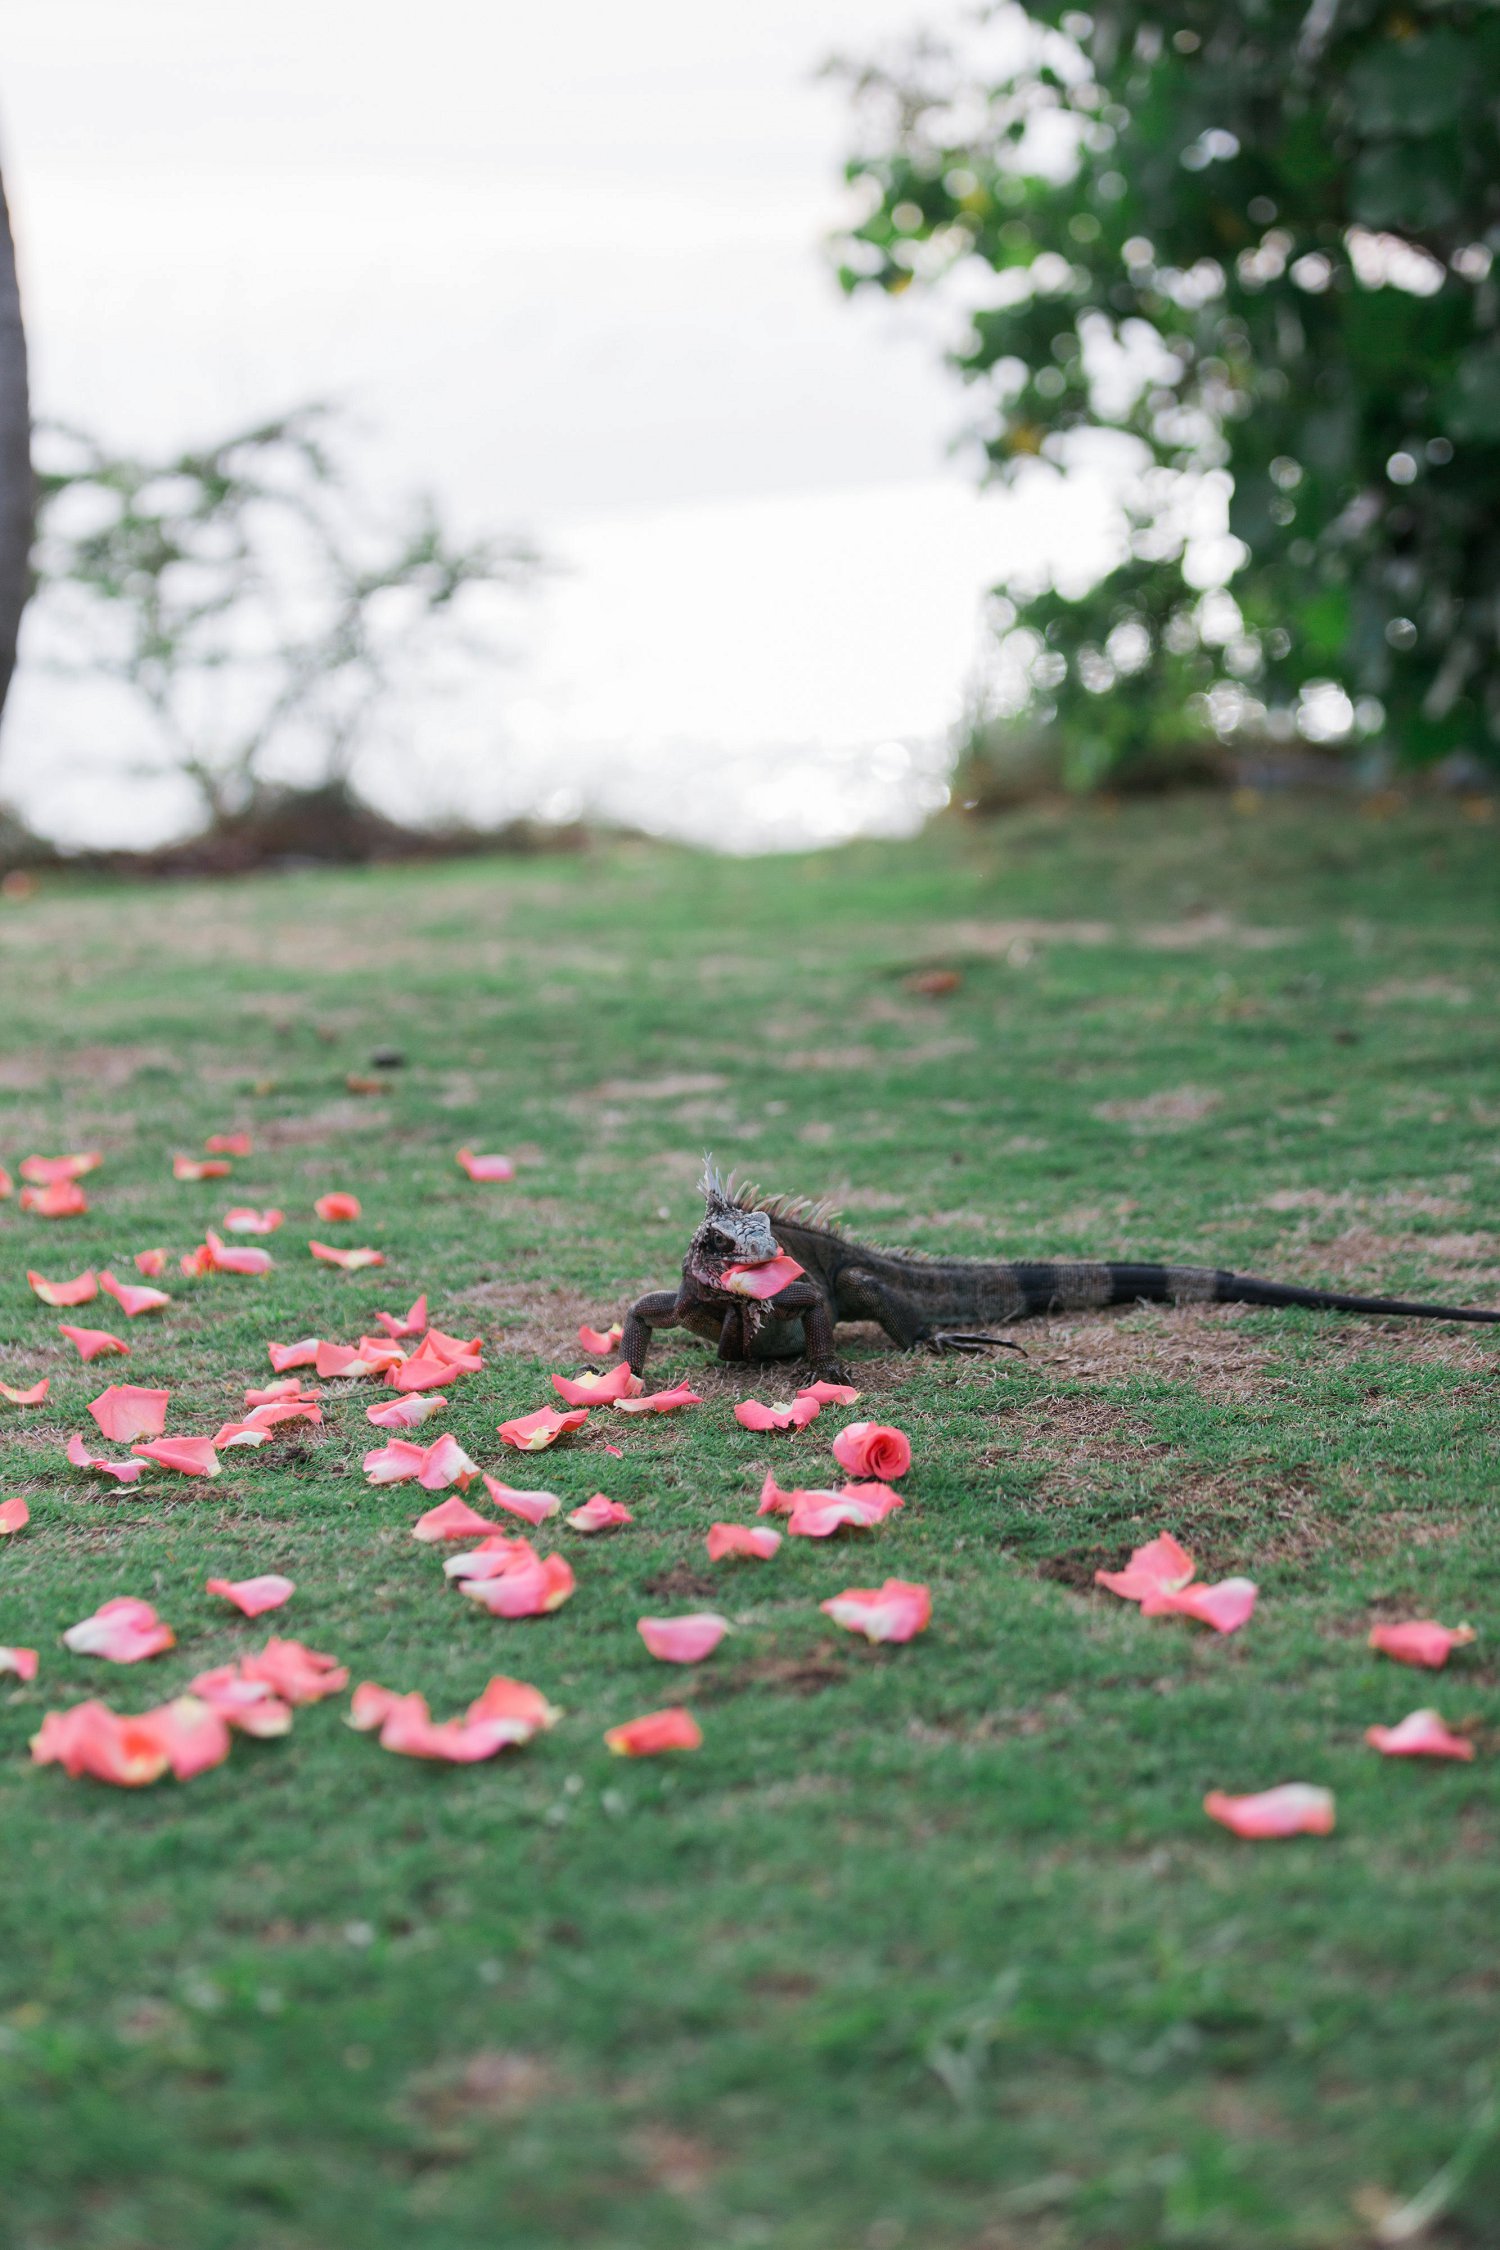 An iguana eats rose petals at a destination wedding.